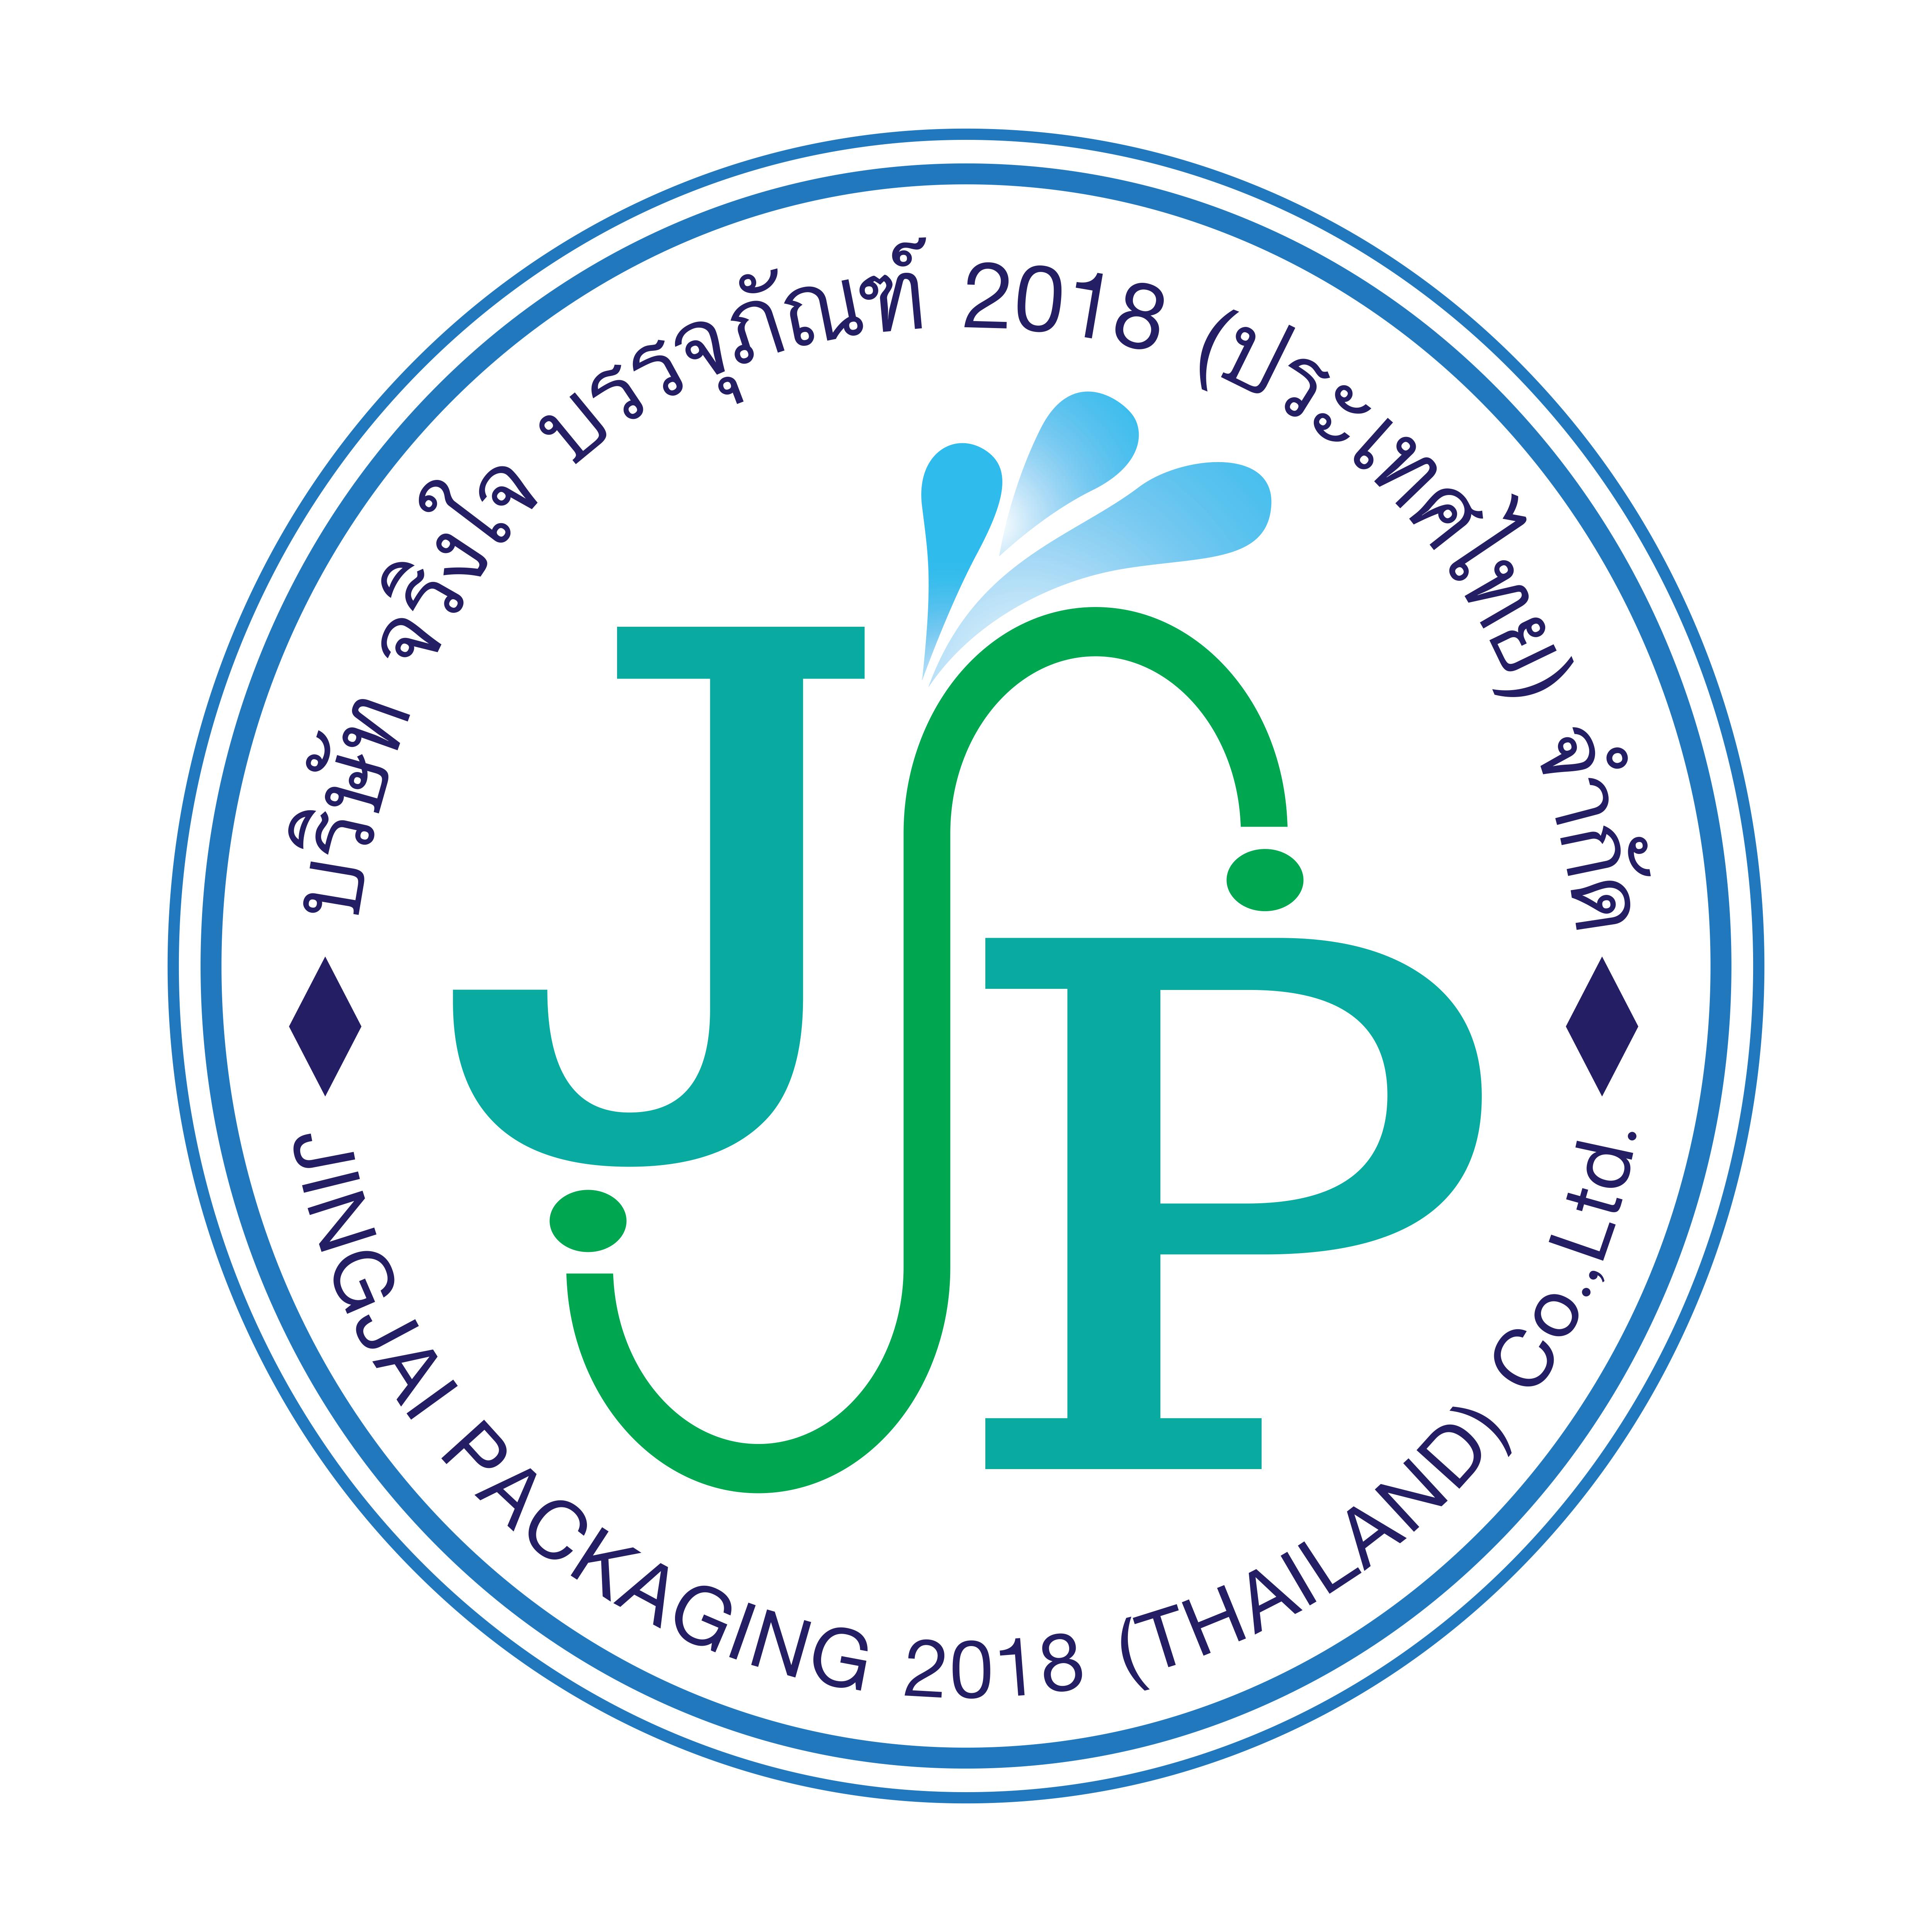 Jingjai Bunjupan 2018 (Thailand) Co.,Ltd., บริษัท จริงใจ บรรจุภัณฑ์ 2018 (ประเทศไทย) จำกัด